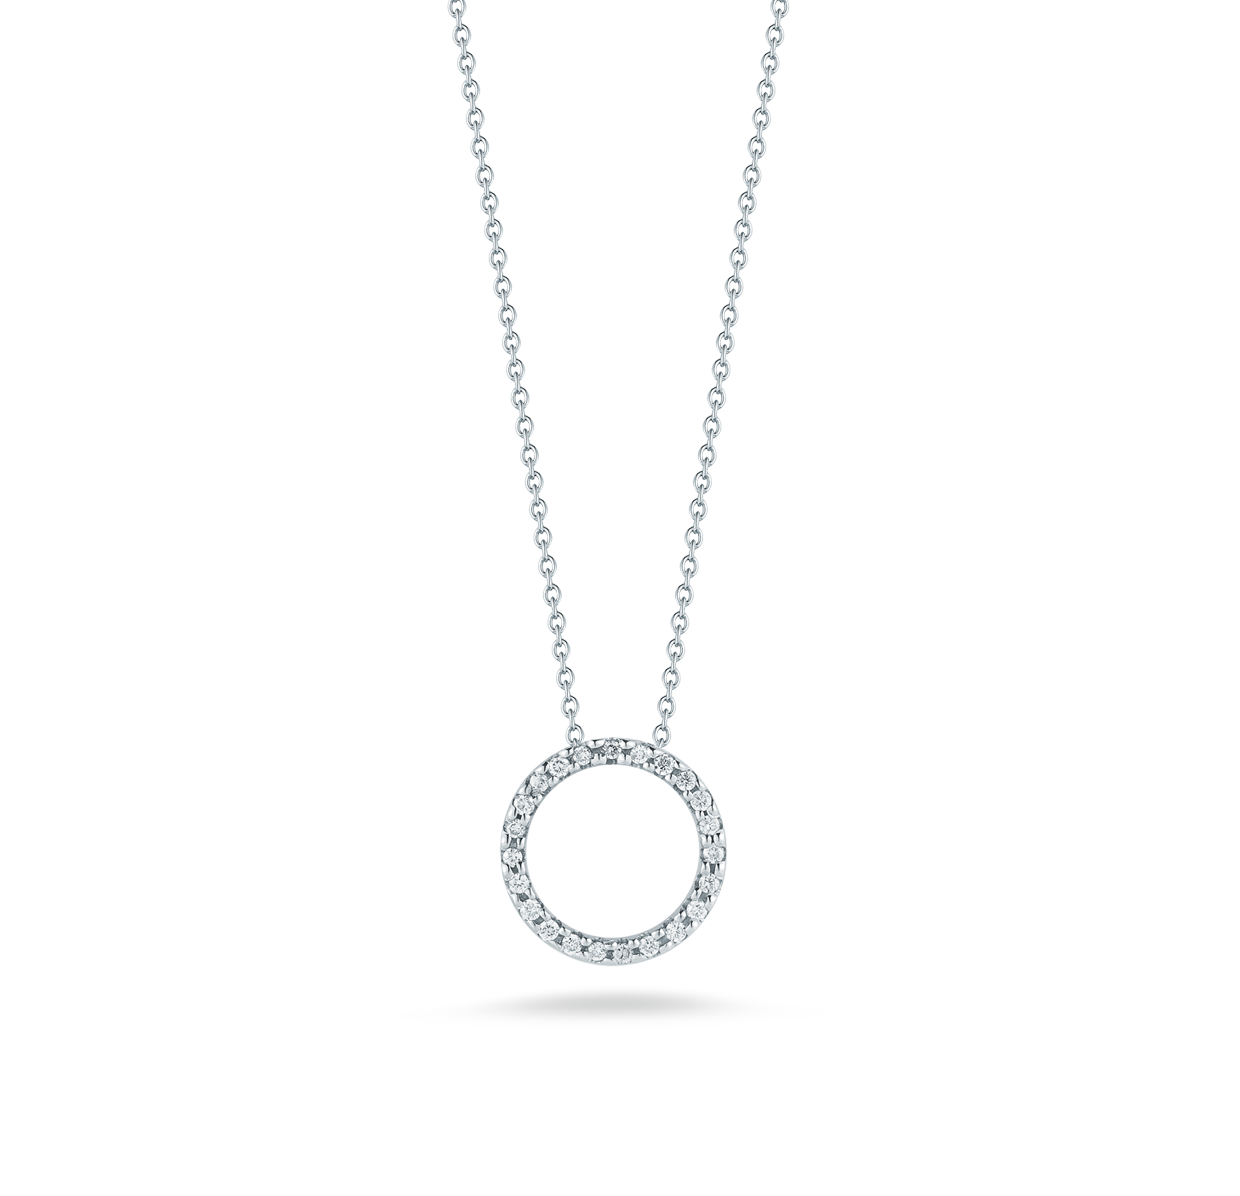 Circle of Life Diamond Necklace